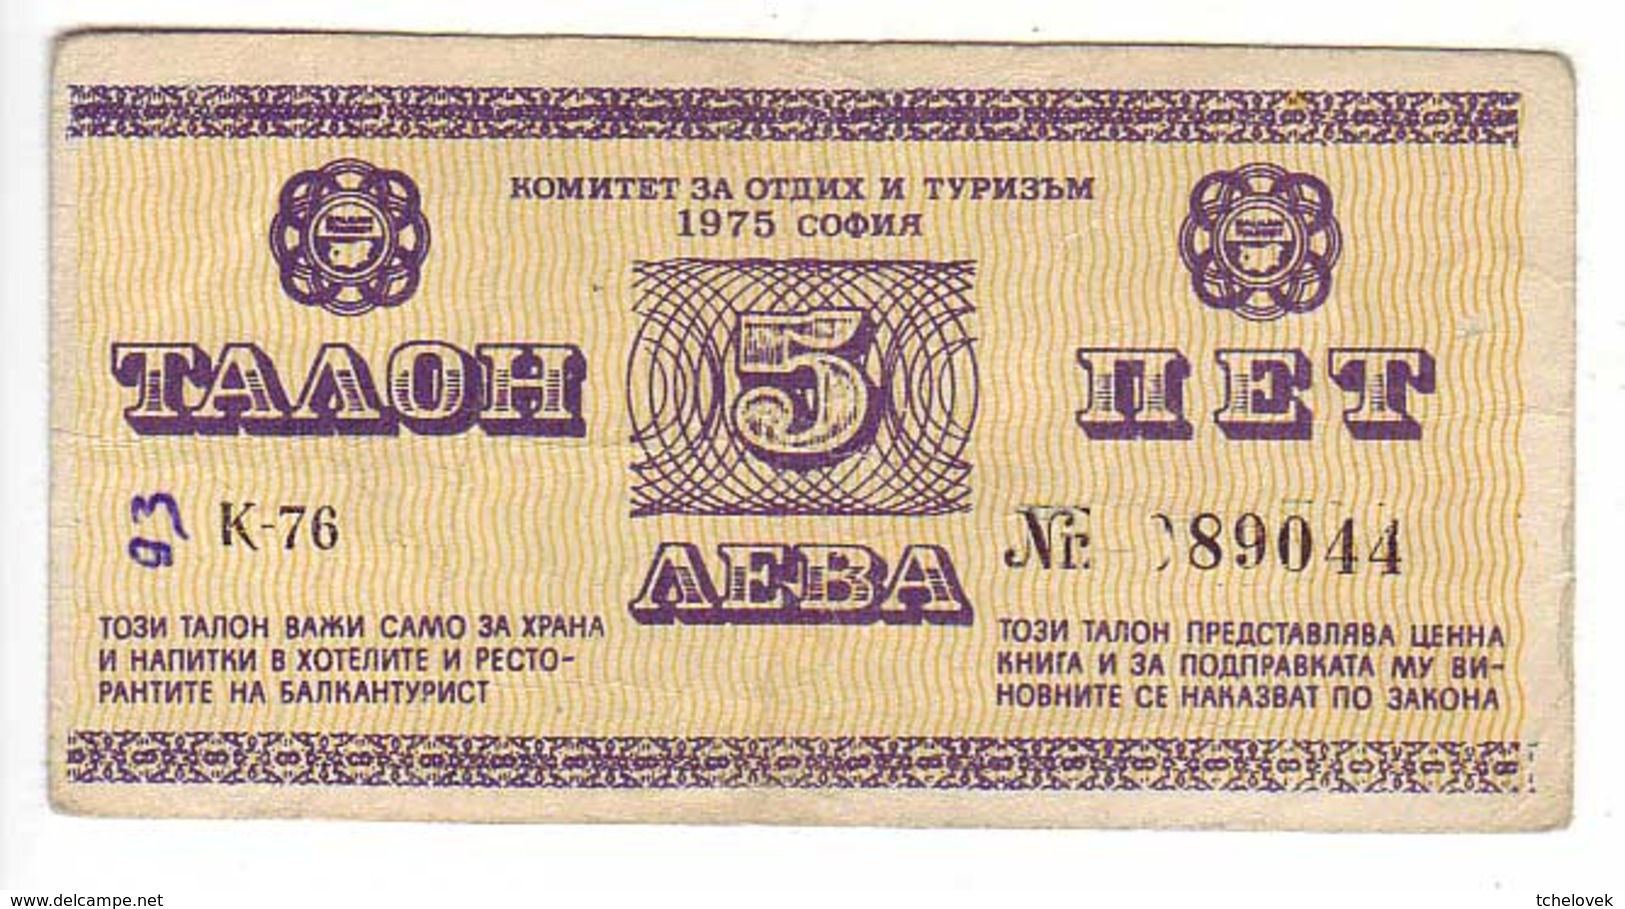 (Billets). Bulgarie Bulgaria. Foreing Exchange Certificate. Rare. Balkan Tourist. 1975. 5 Leva Serie K-76 N° 089044 - Bulgarije